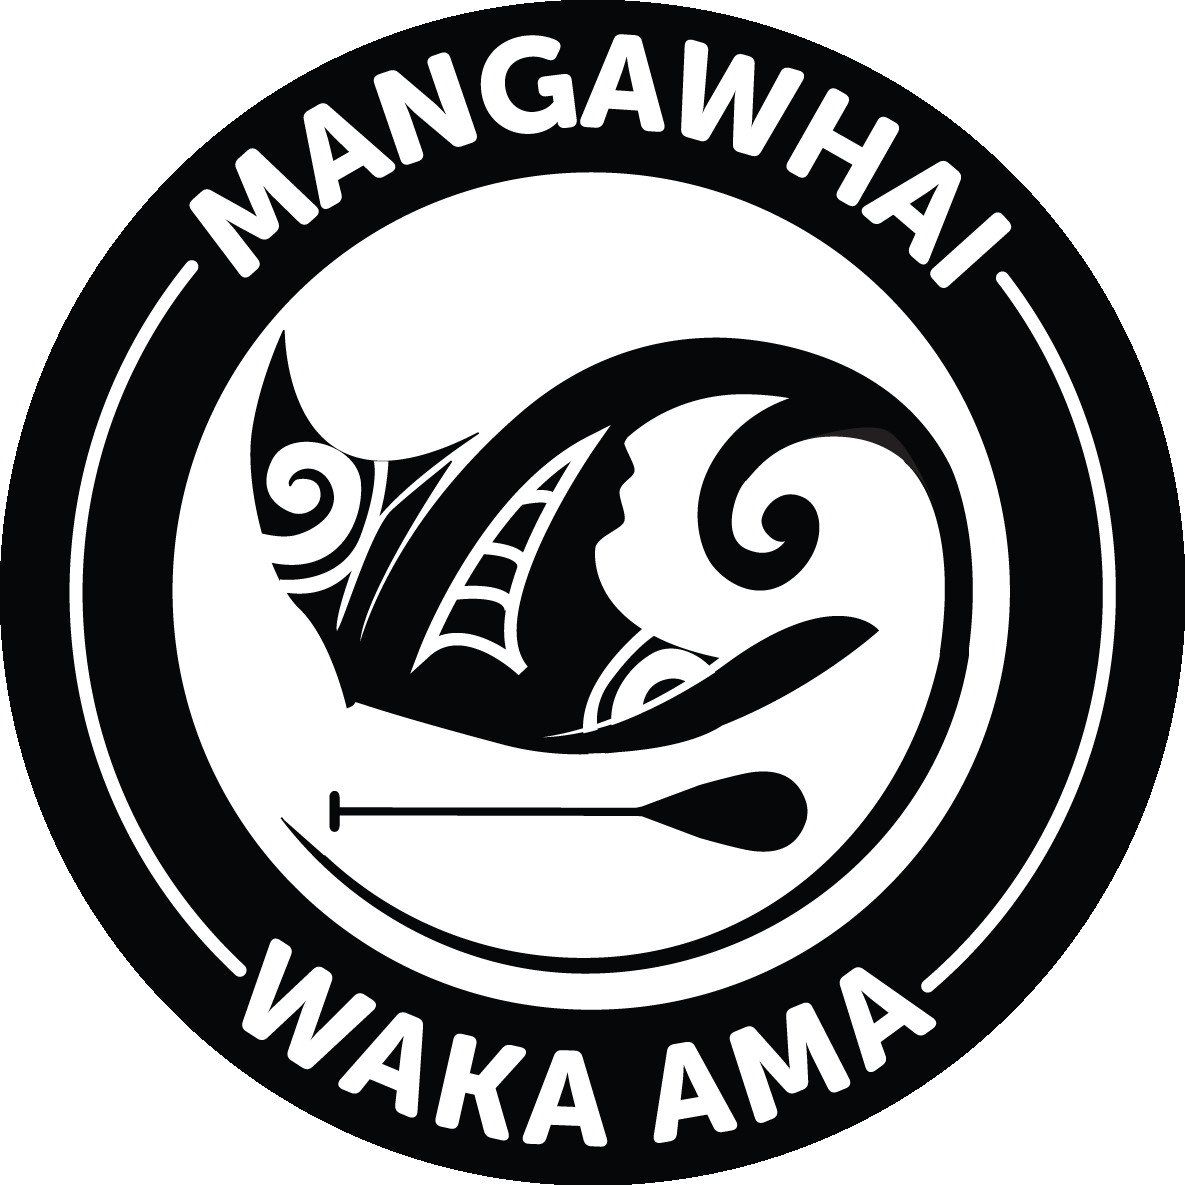 Mangawhai Waka Ama